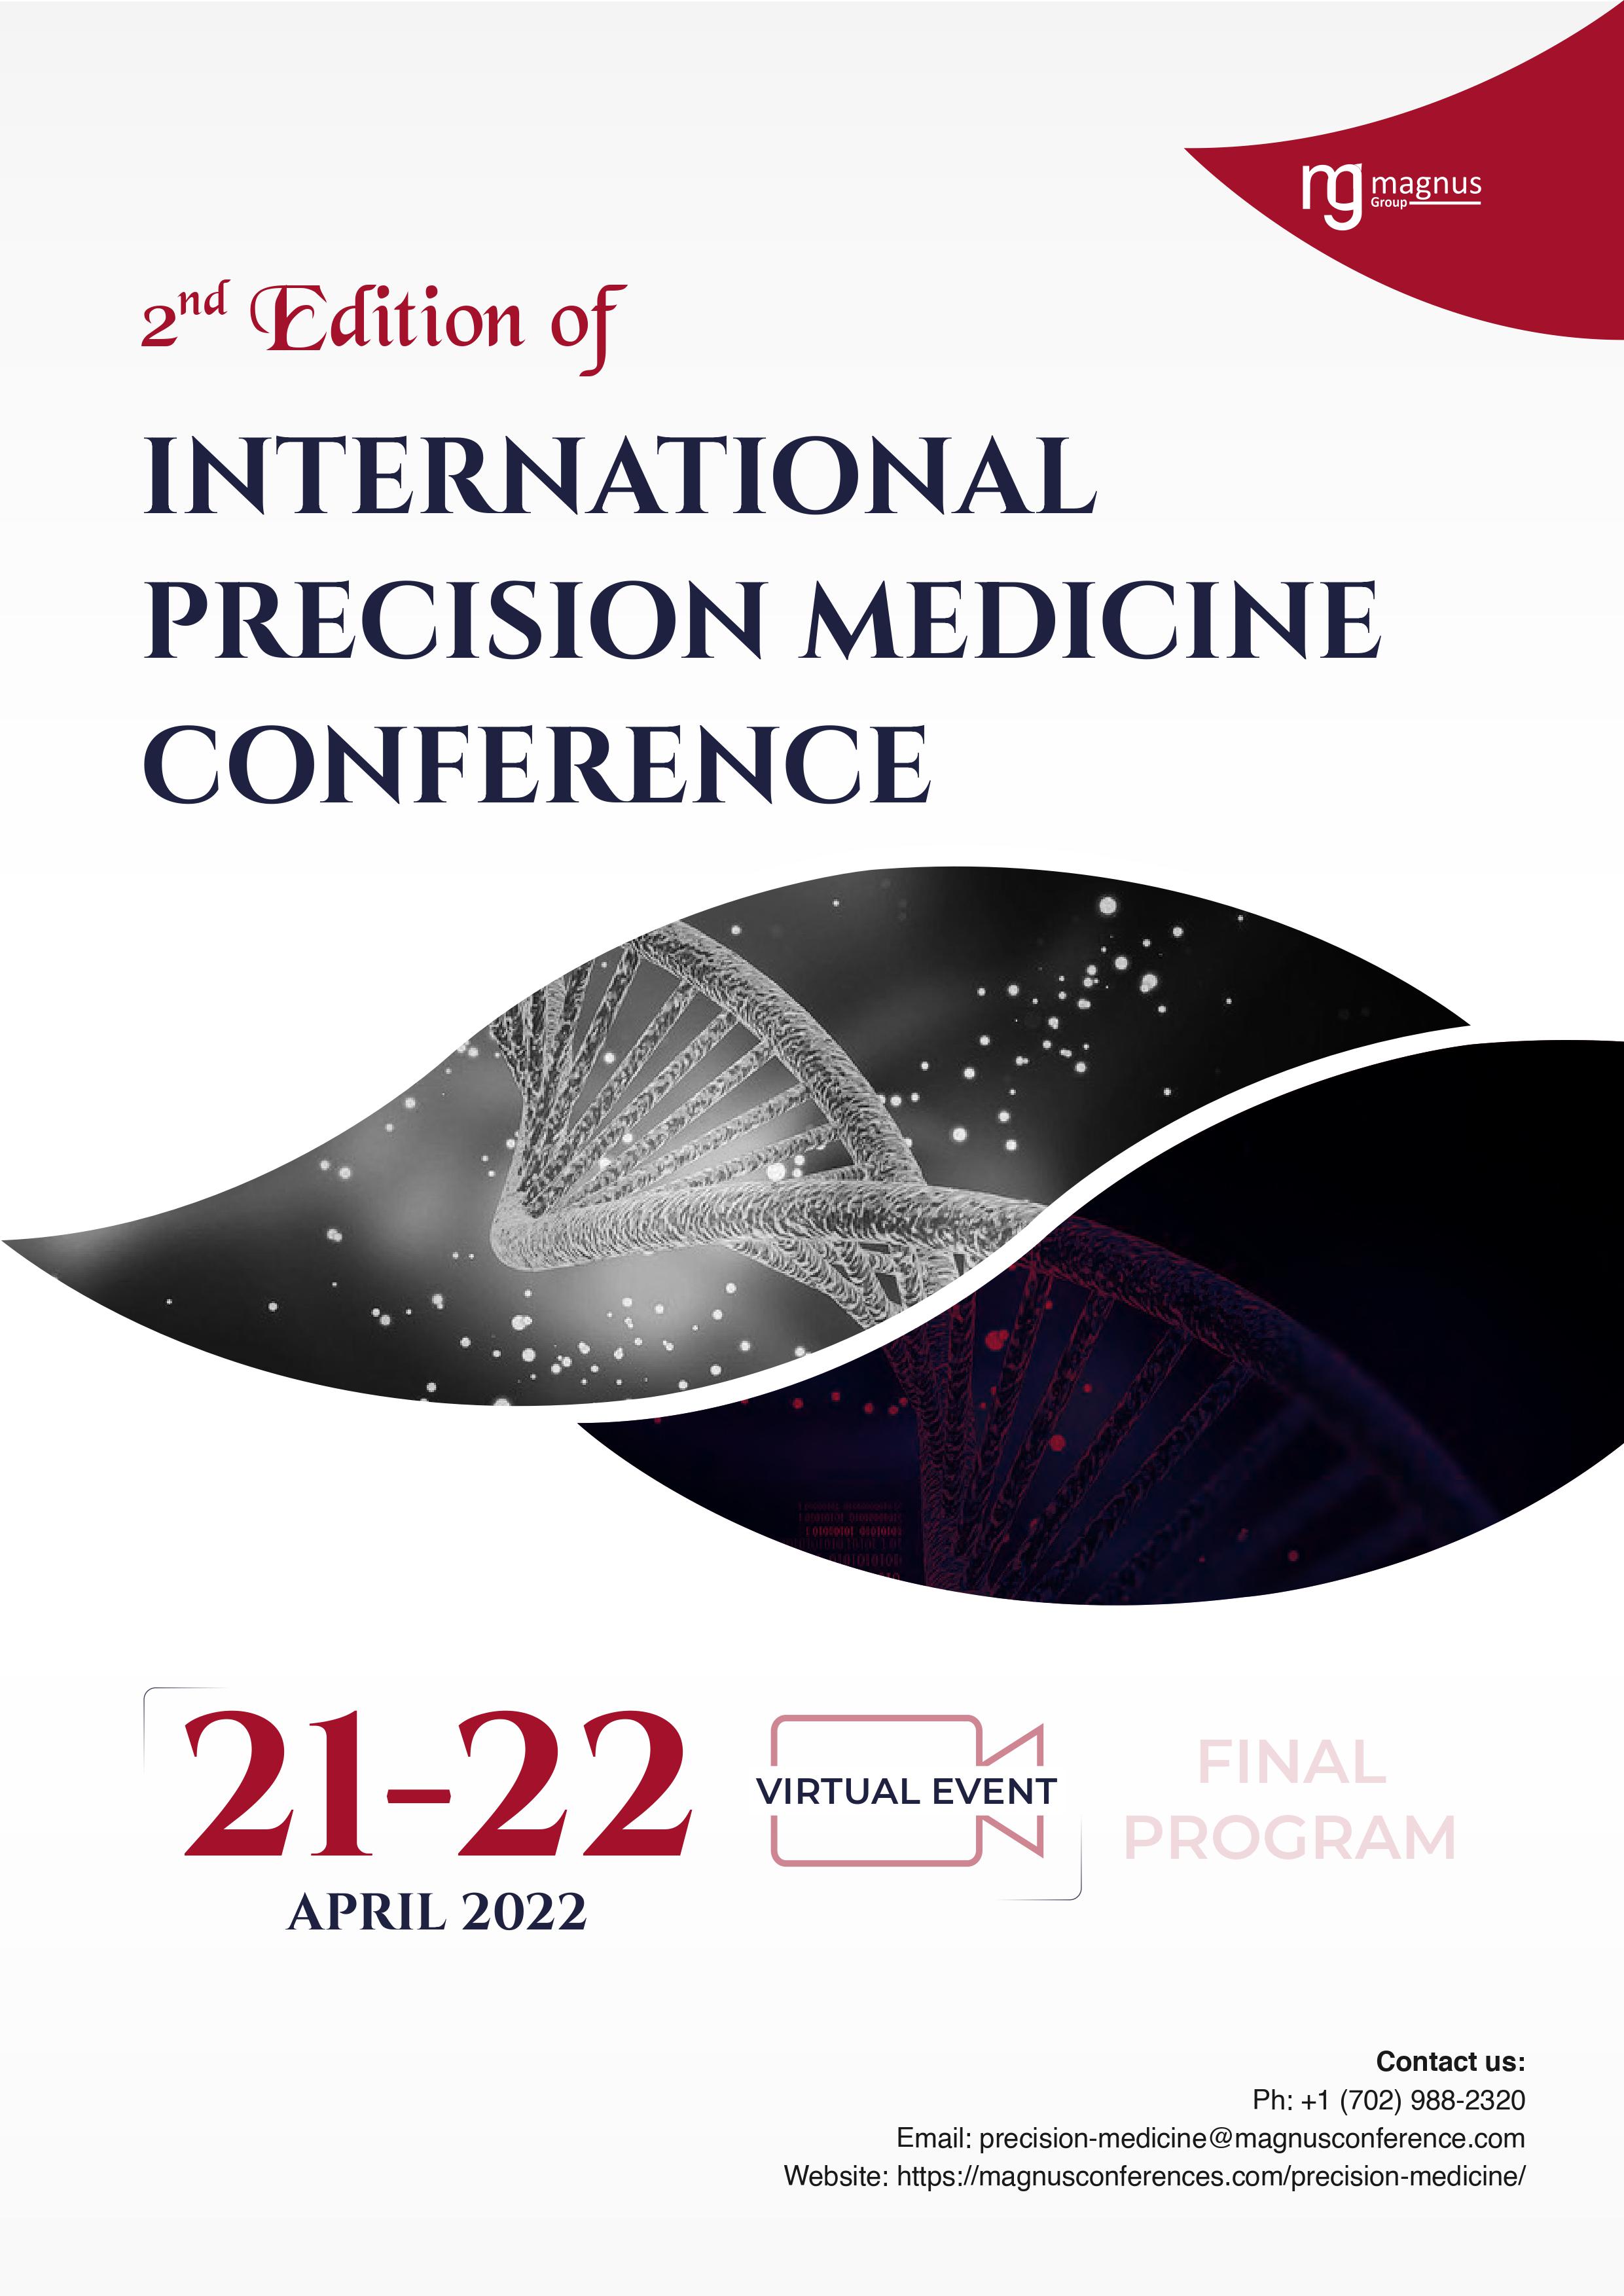 2nd Edition of International Precision Medicine Conference | Online Event Program